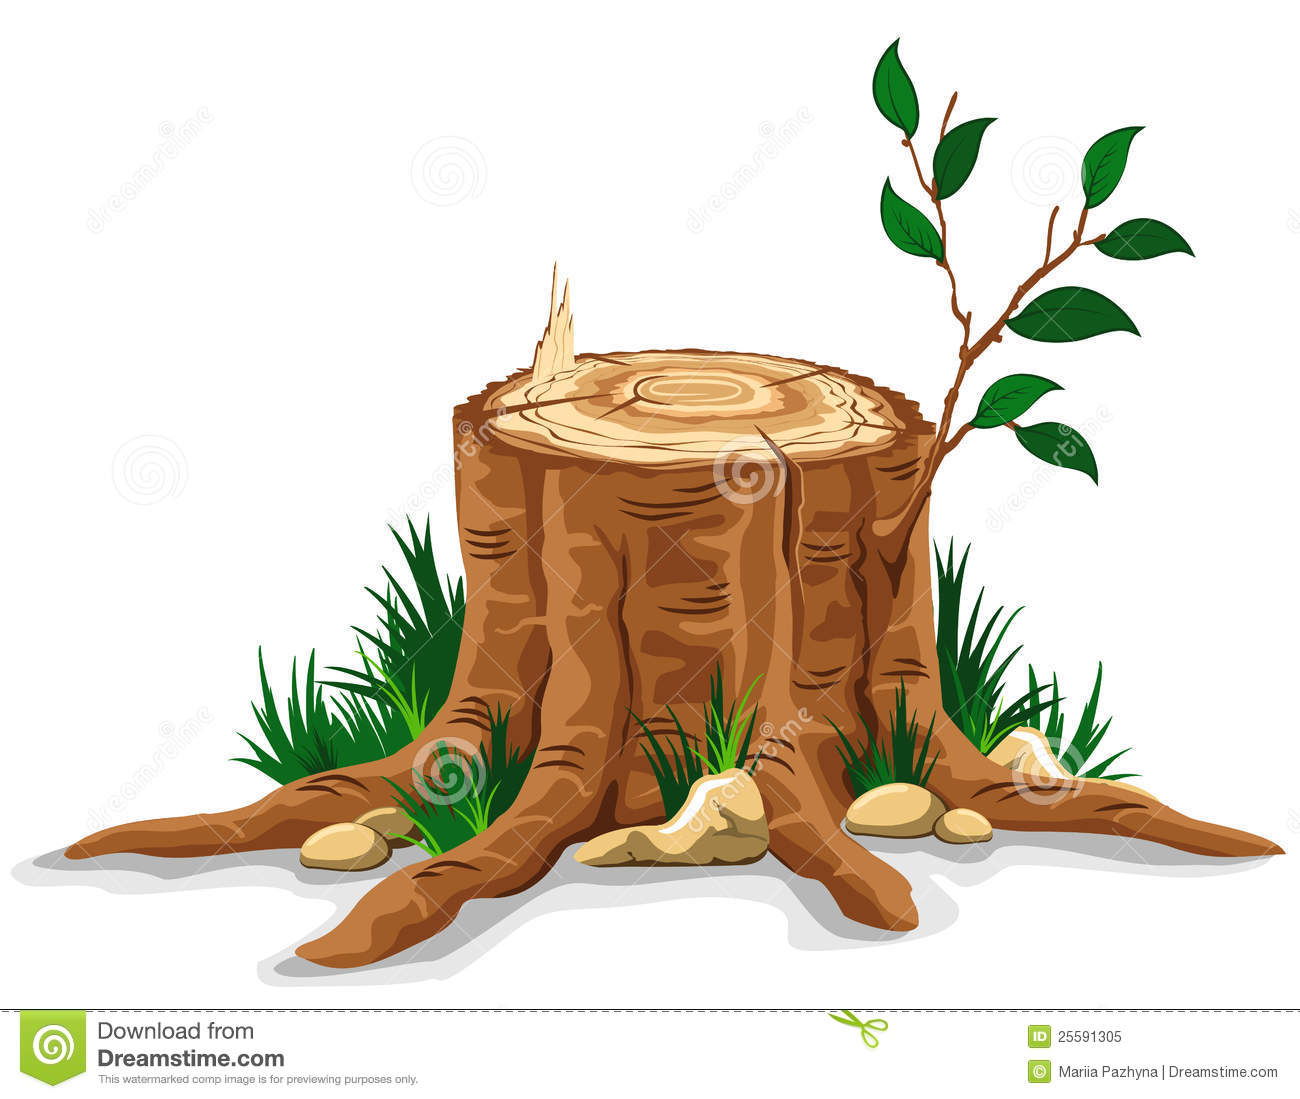 Cross section of tree stump i